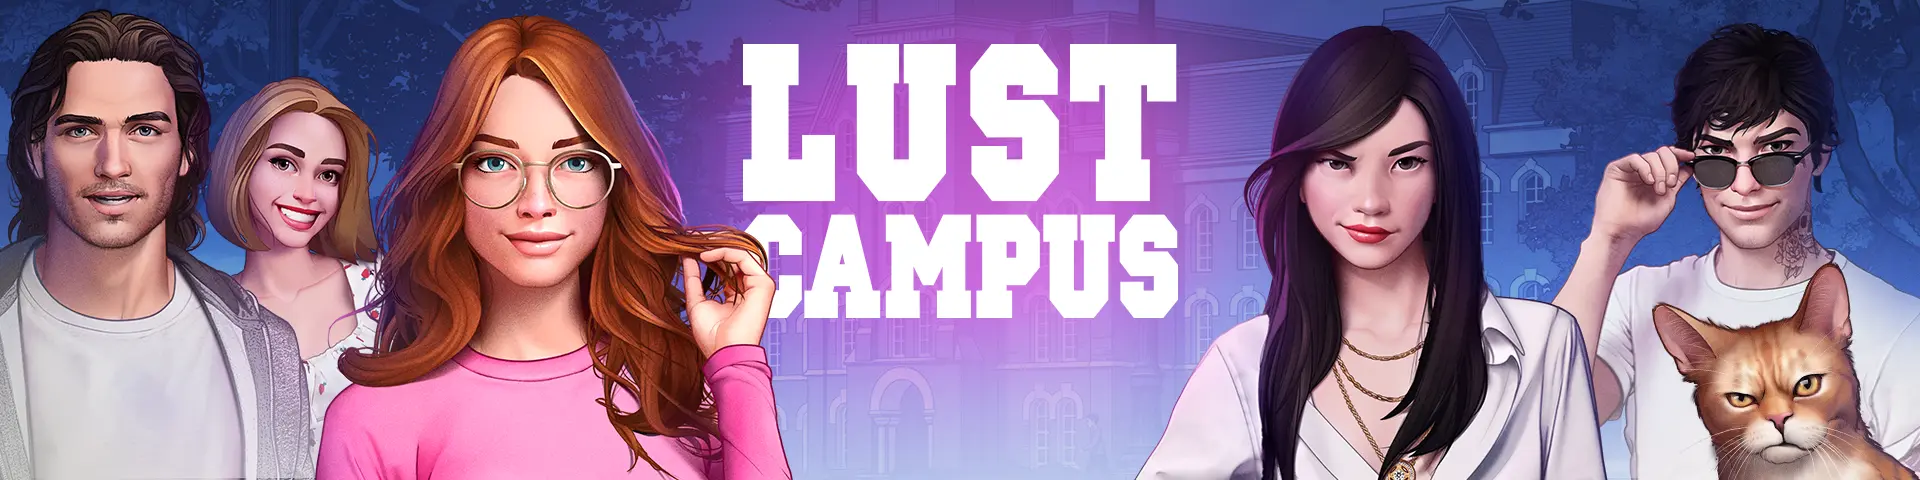 Lust Campus [v0.1] main image